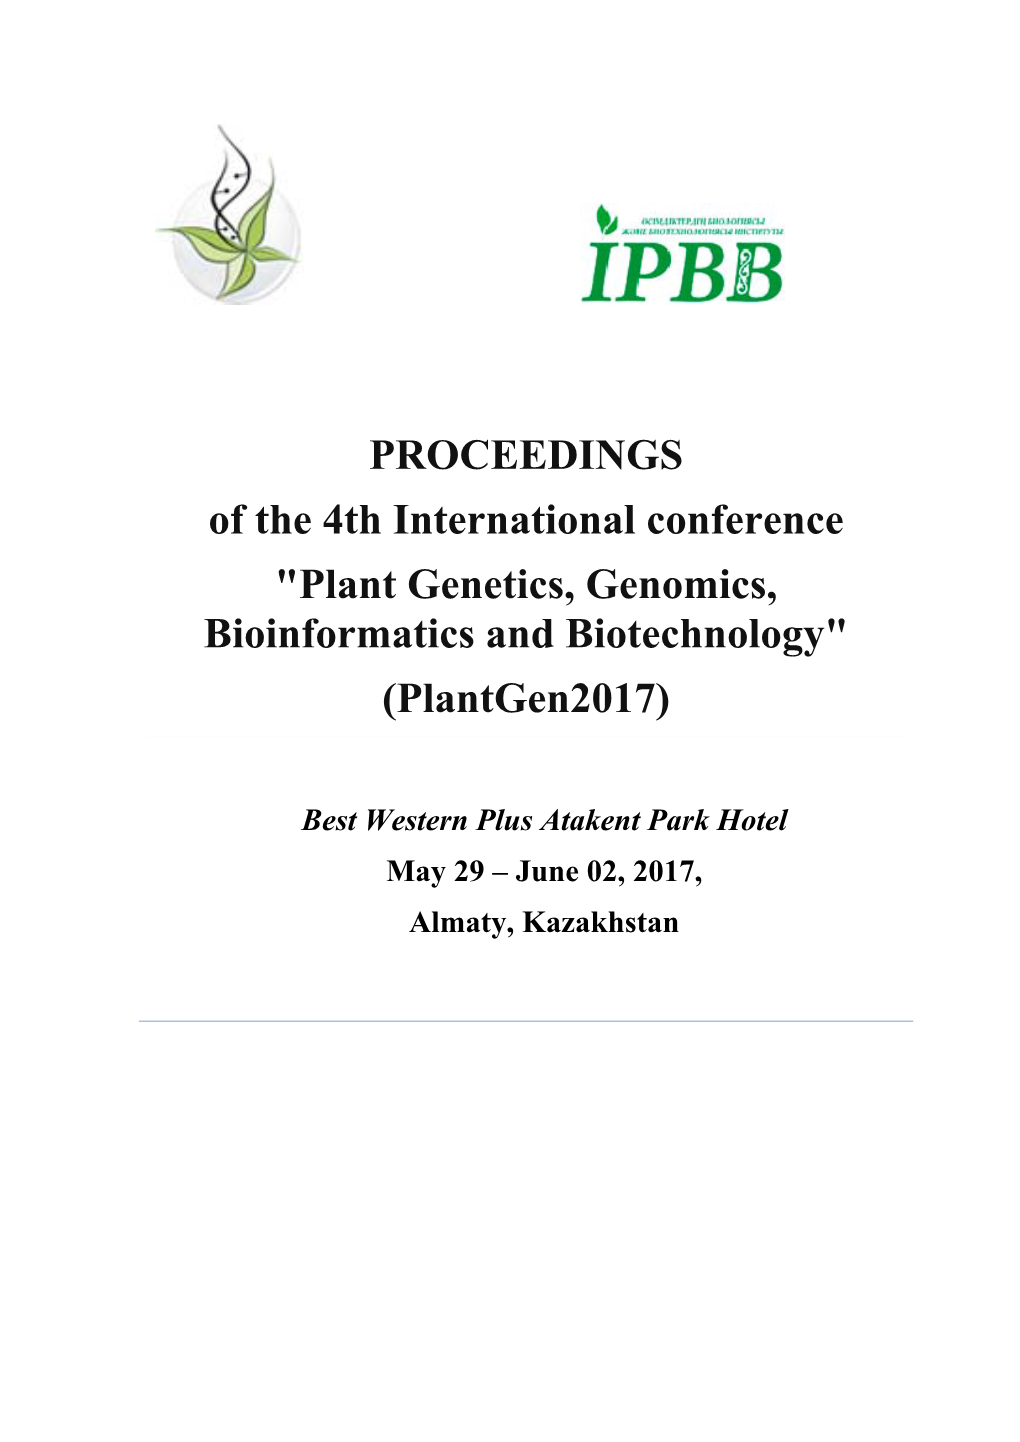 Plant Genetics, Genomics, Bioinformatics and Biotechnology" (Plantgen2017)